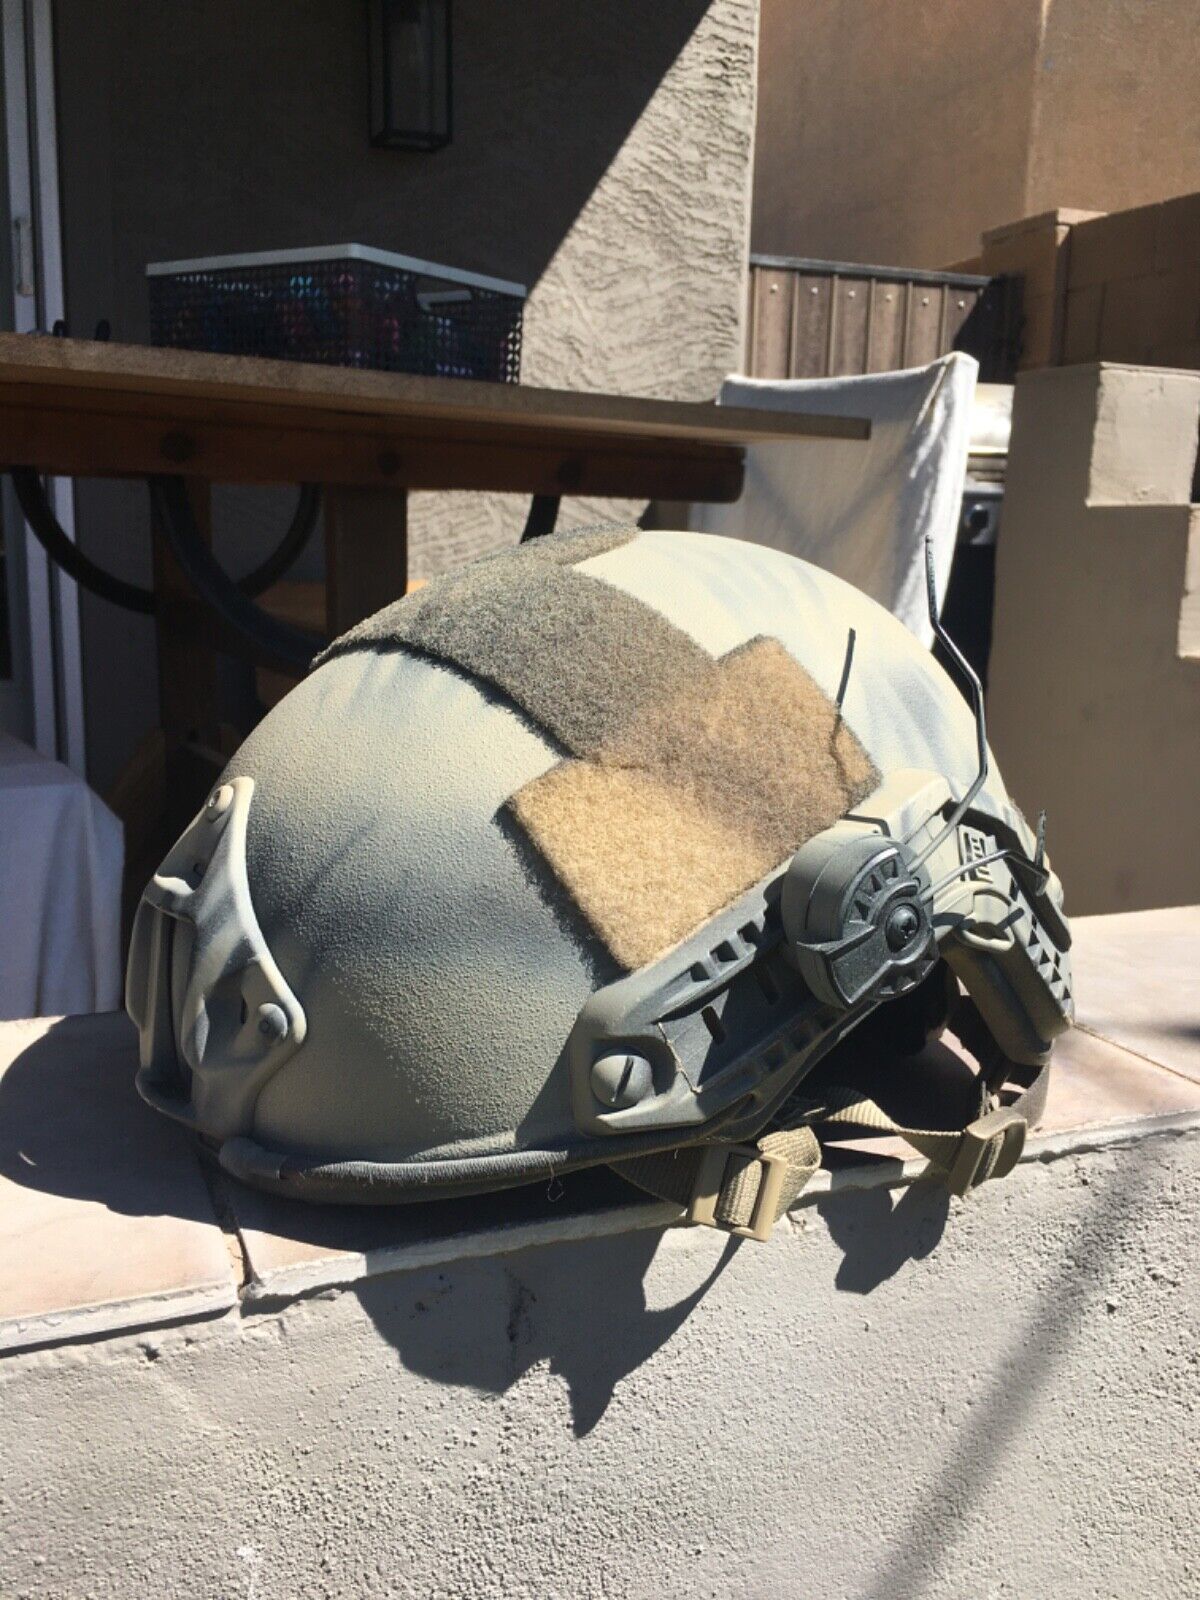 ballistic helmet CPG armor, M/L, Level 3A, Arc rail hearing pro adaptors include